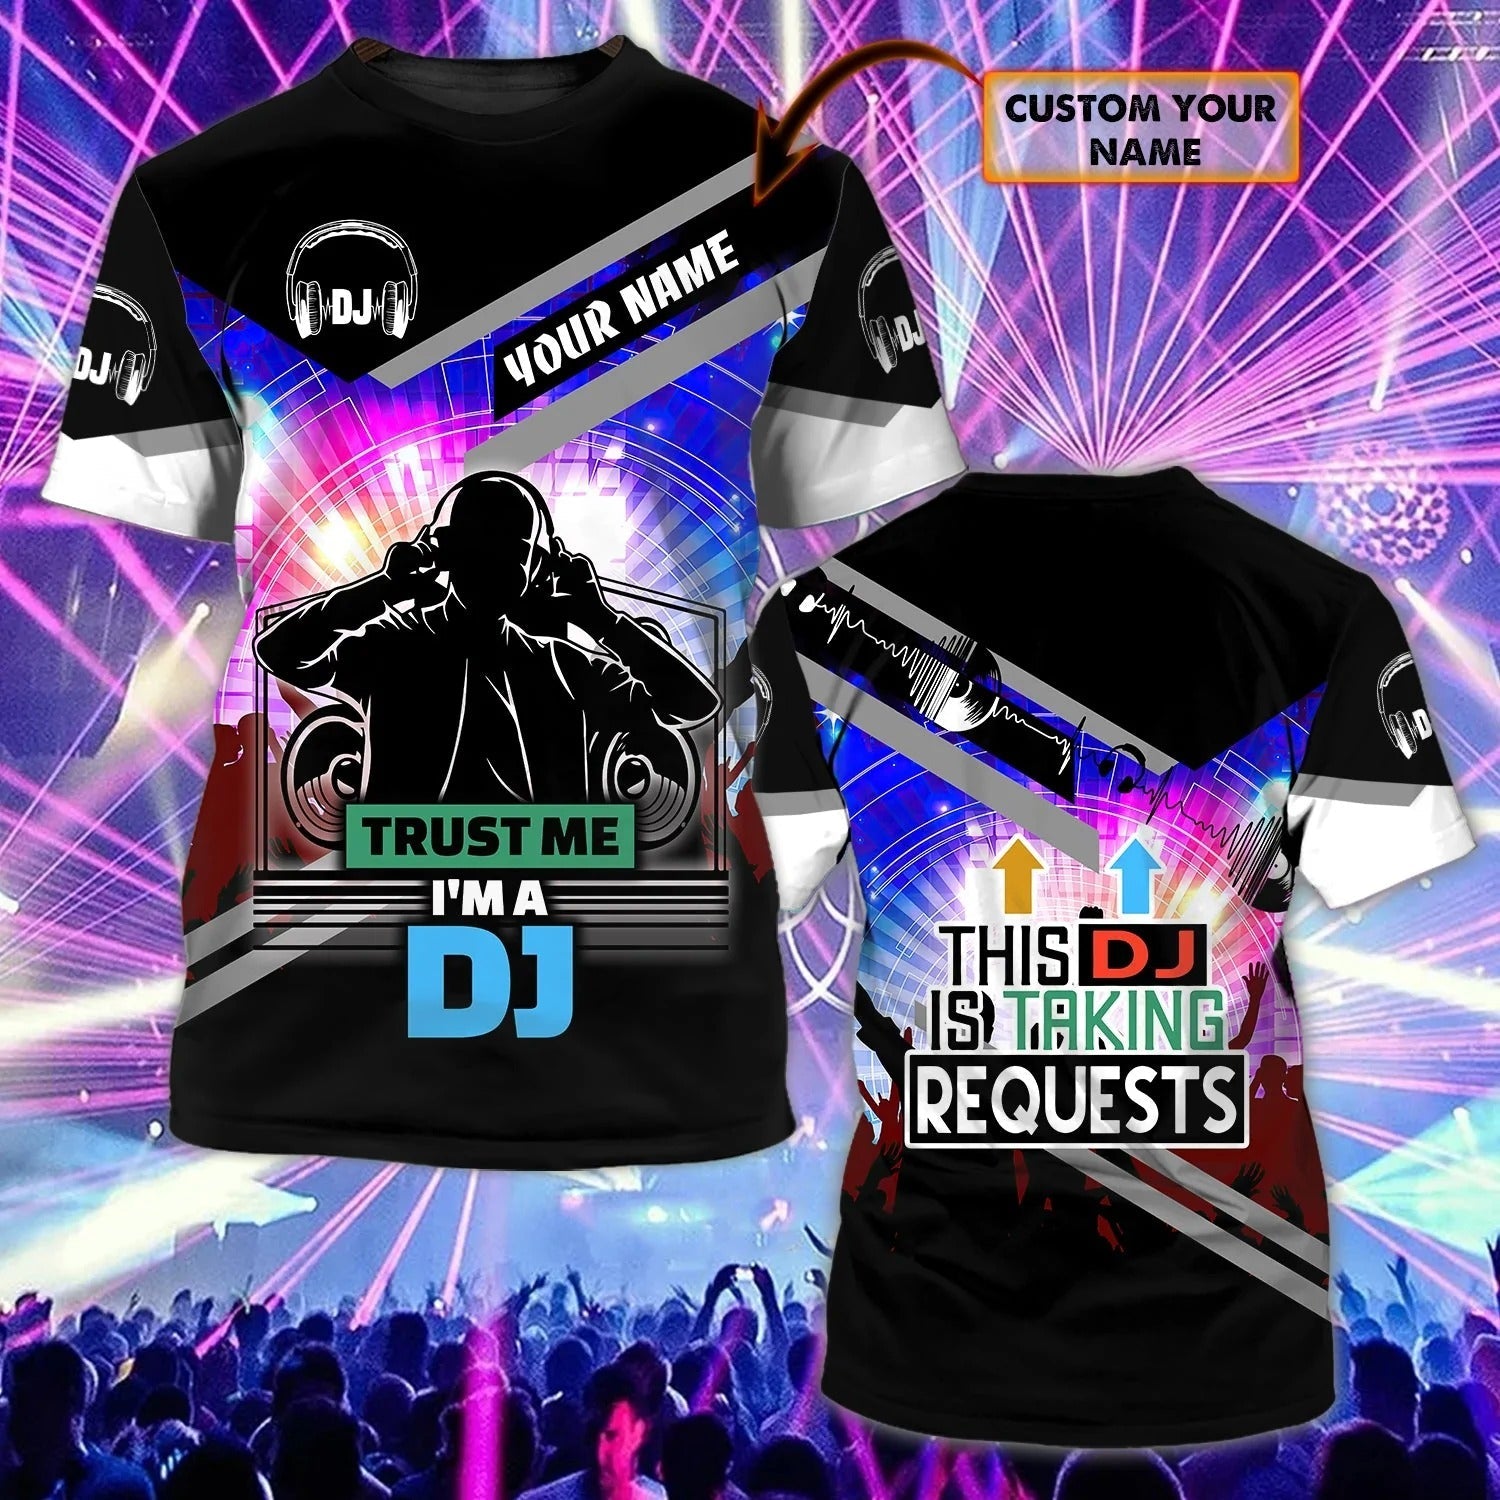 Custom DJ Shirt Men Women/ Trust Me I Am A DJ/ Funny Disc Jockey Tee Shirts